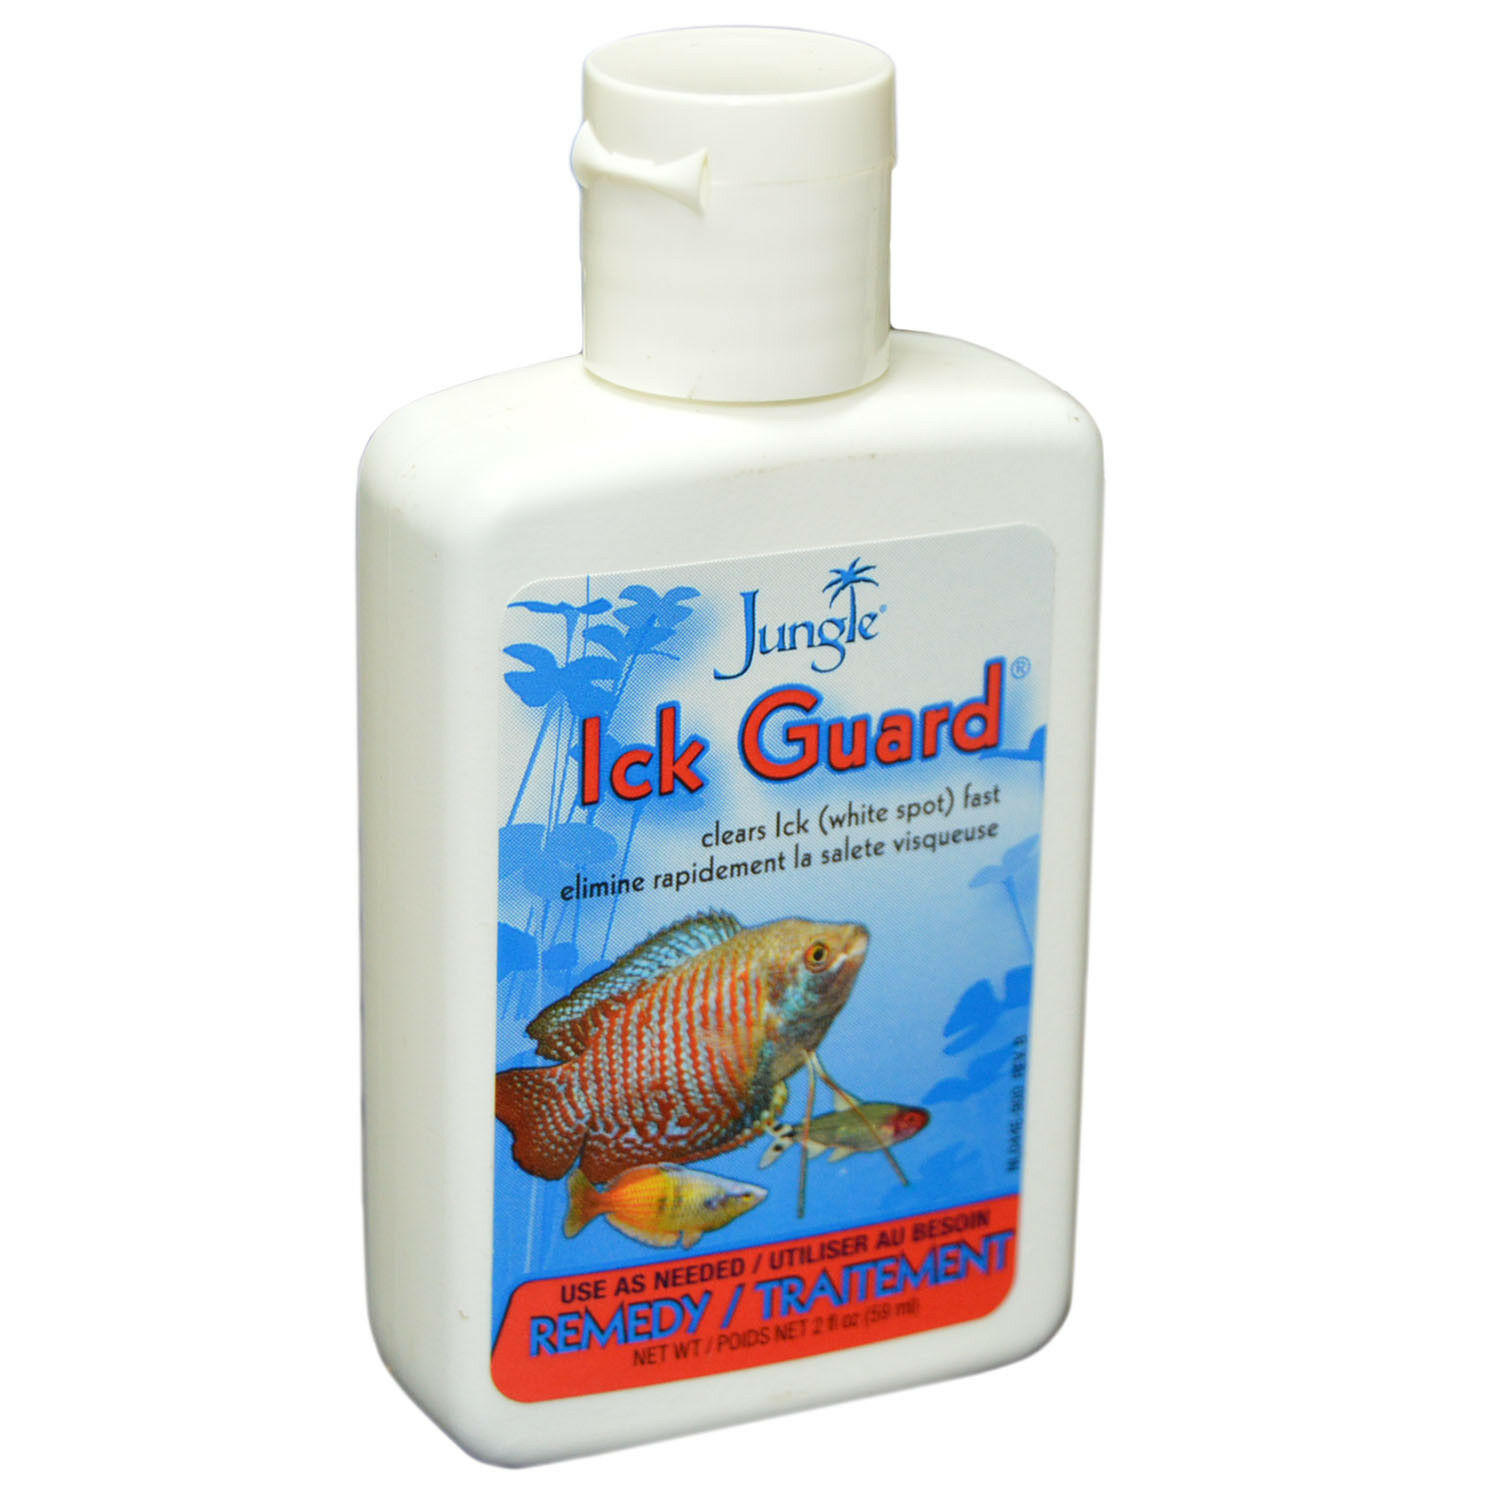 Jungle Ick Guard Treatment Remedy For Fish 2oz (59ml)  Up To 118 Gls. Liquid